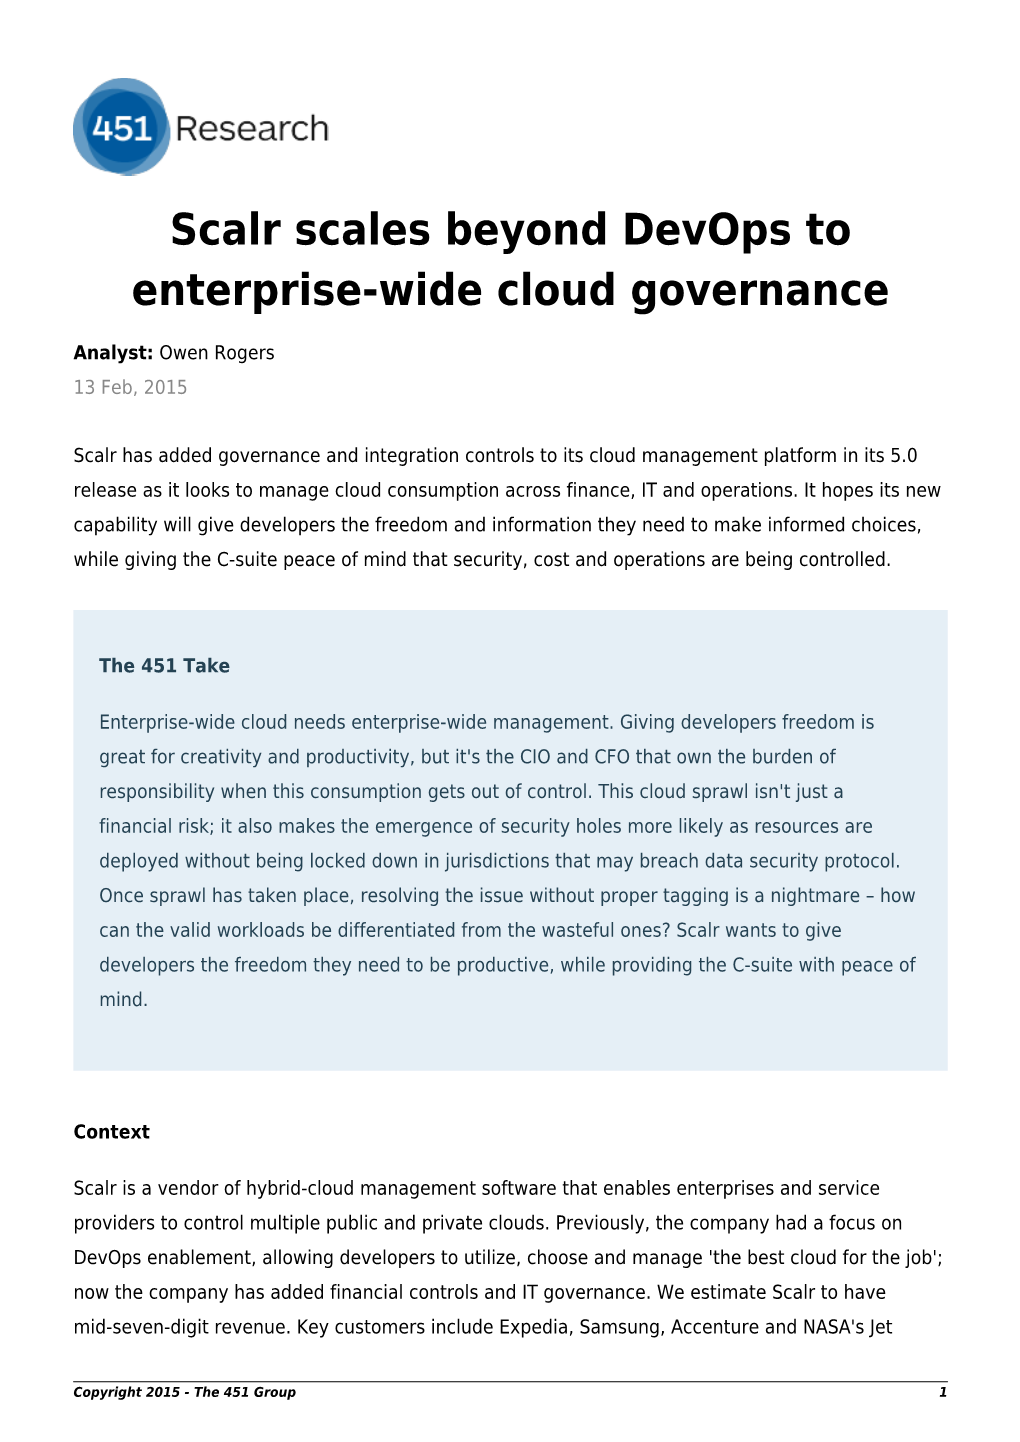 Scalr Scales Beyond Devops to Enterprise-Wide Cloud Governance